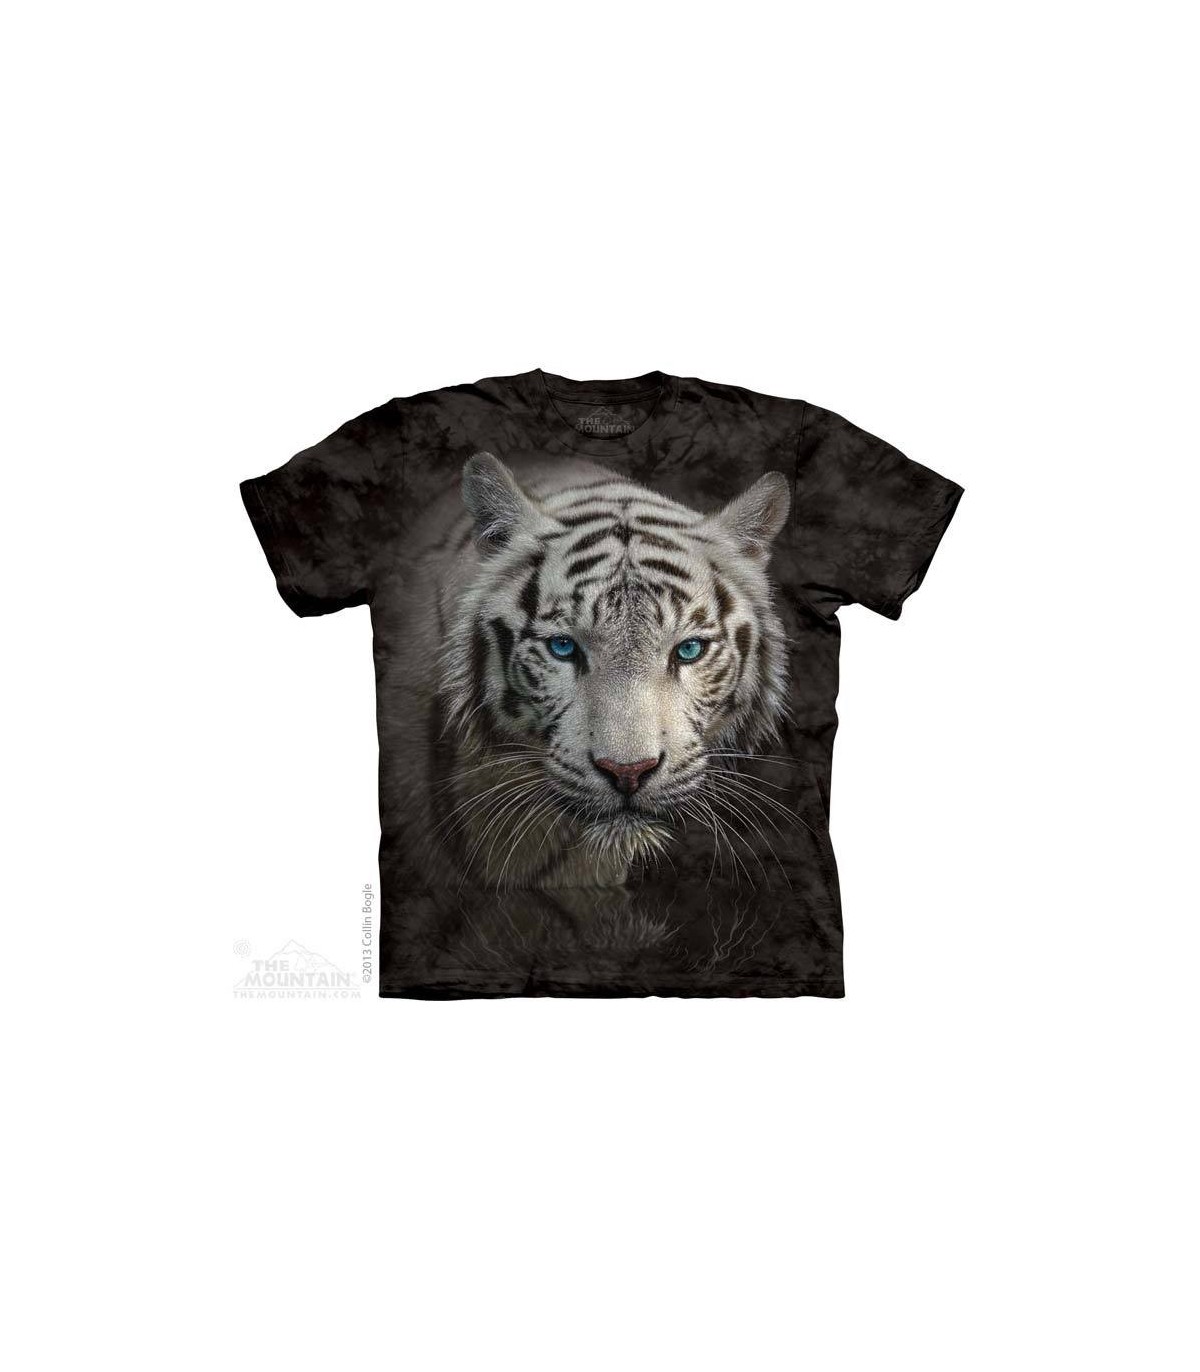 the mountain tiger shirt